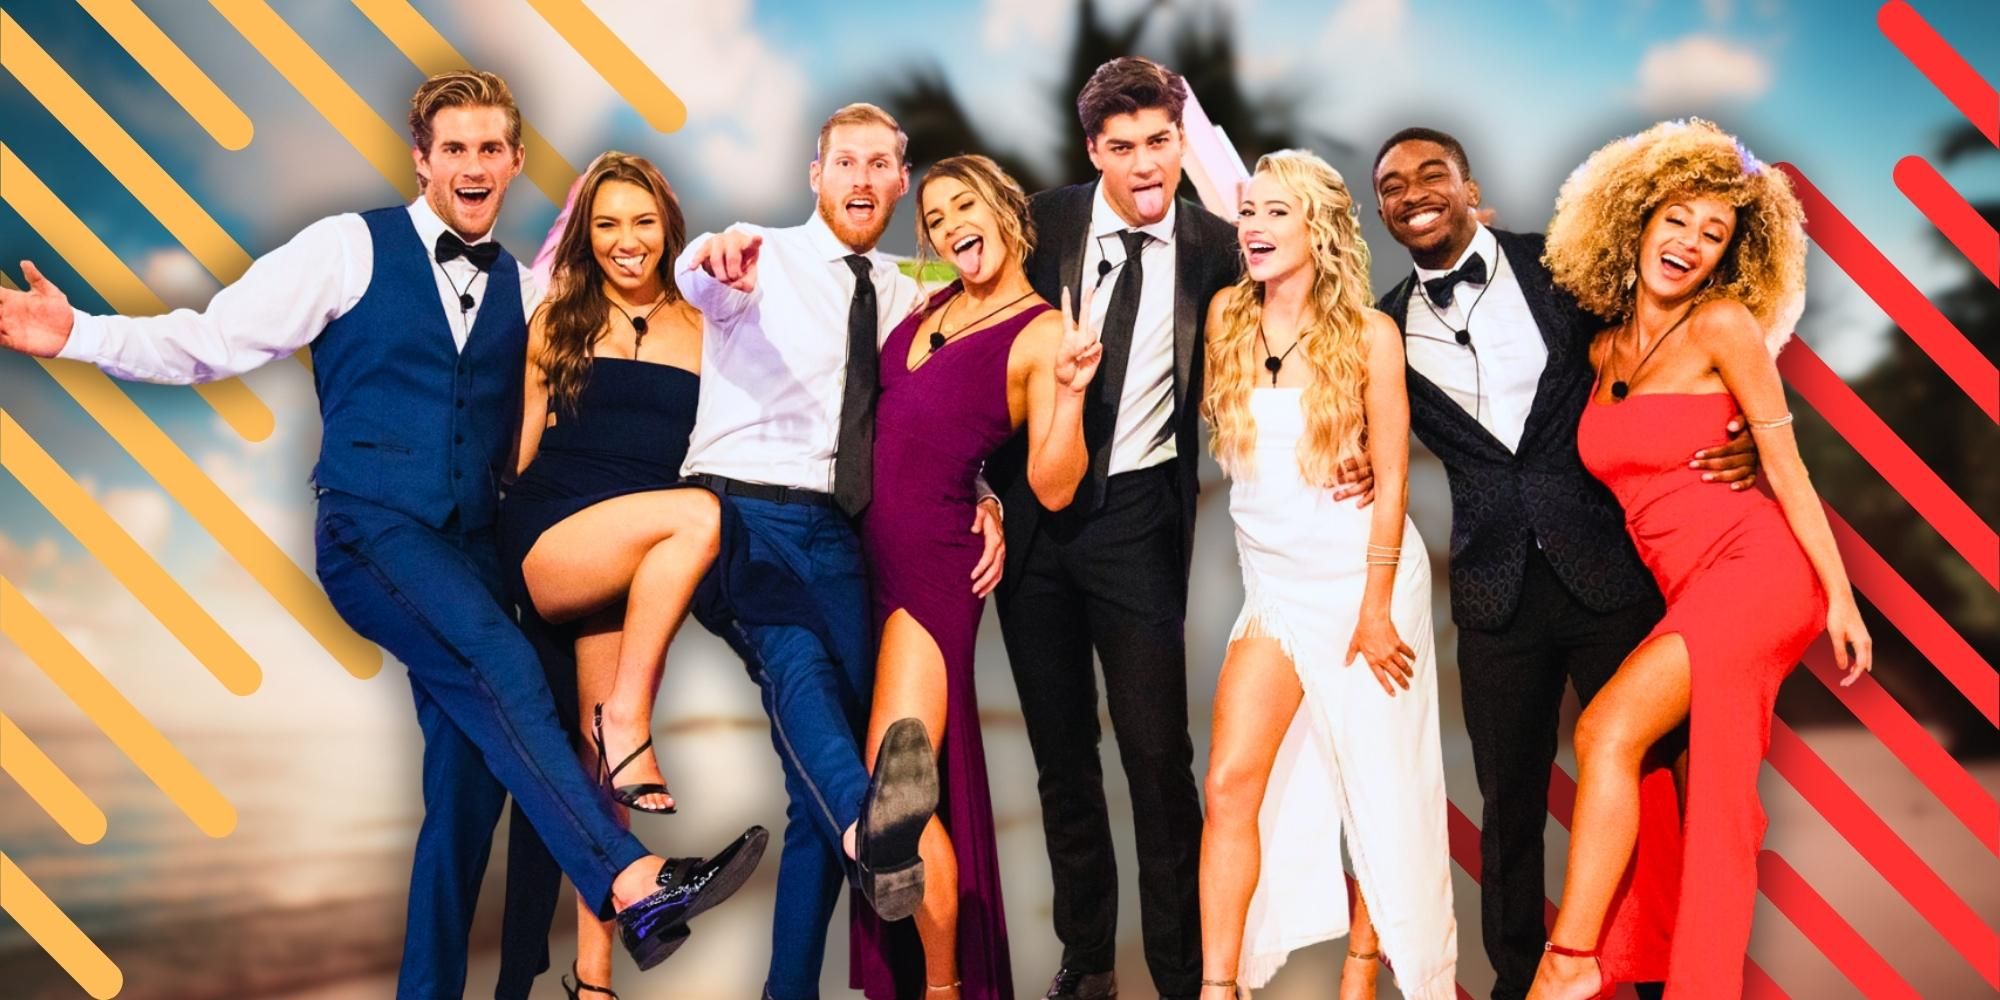 Love Island USA Season 1 Cast: Where Are They Now?